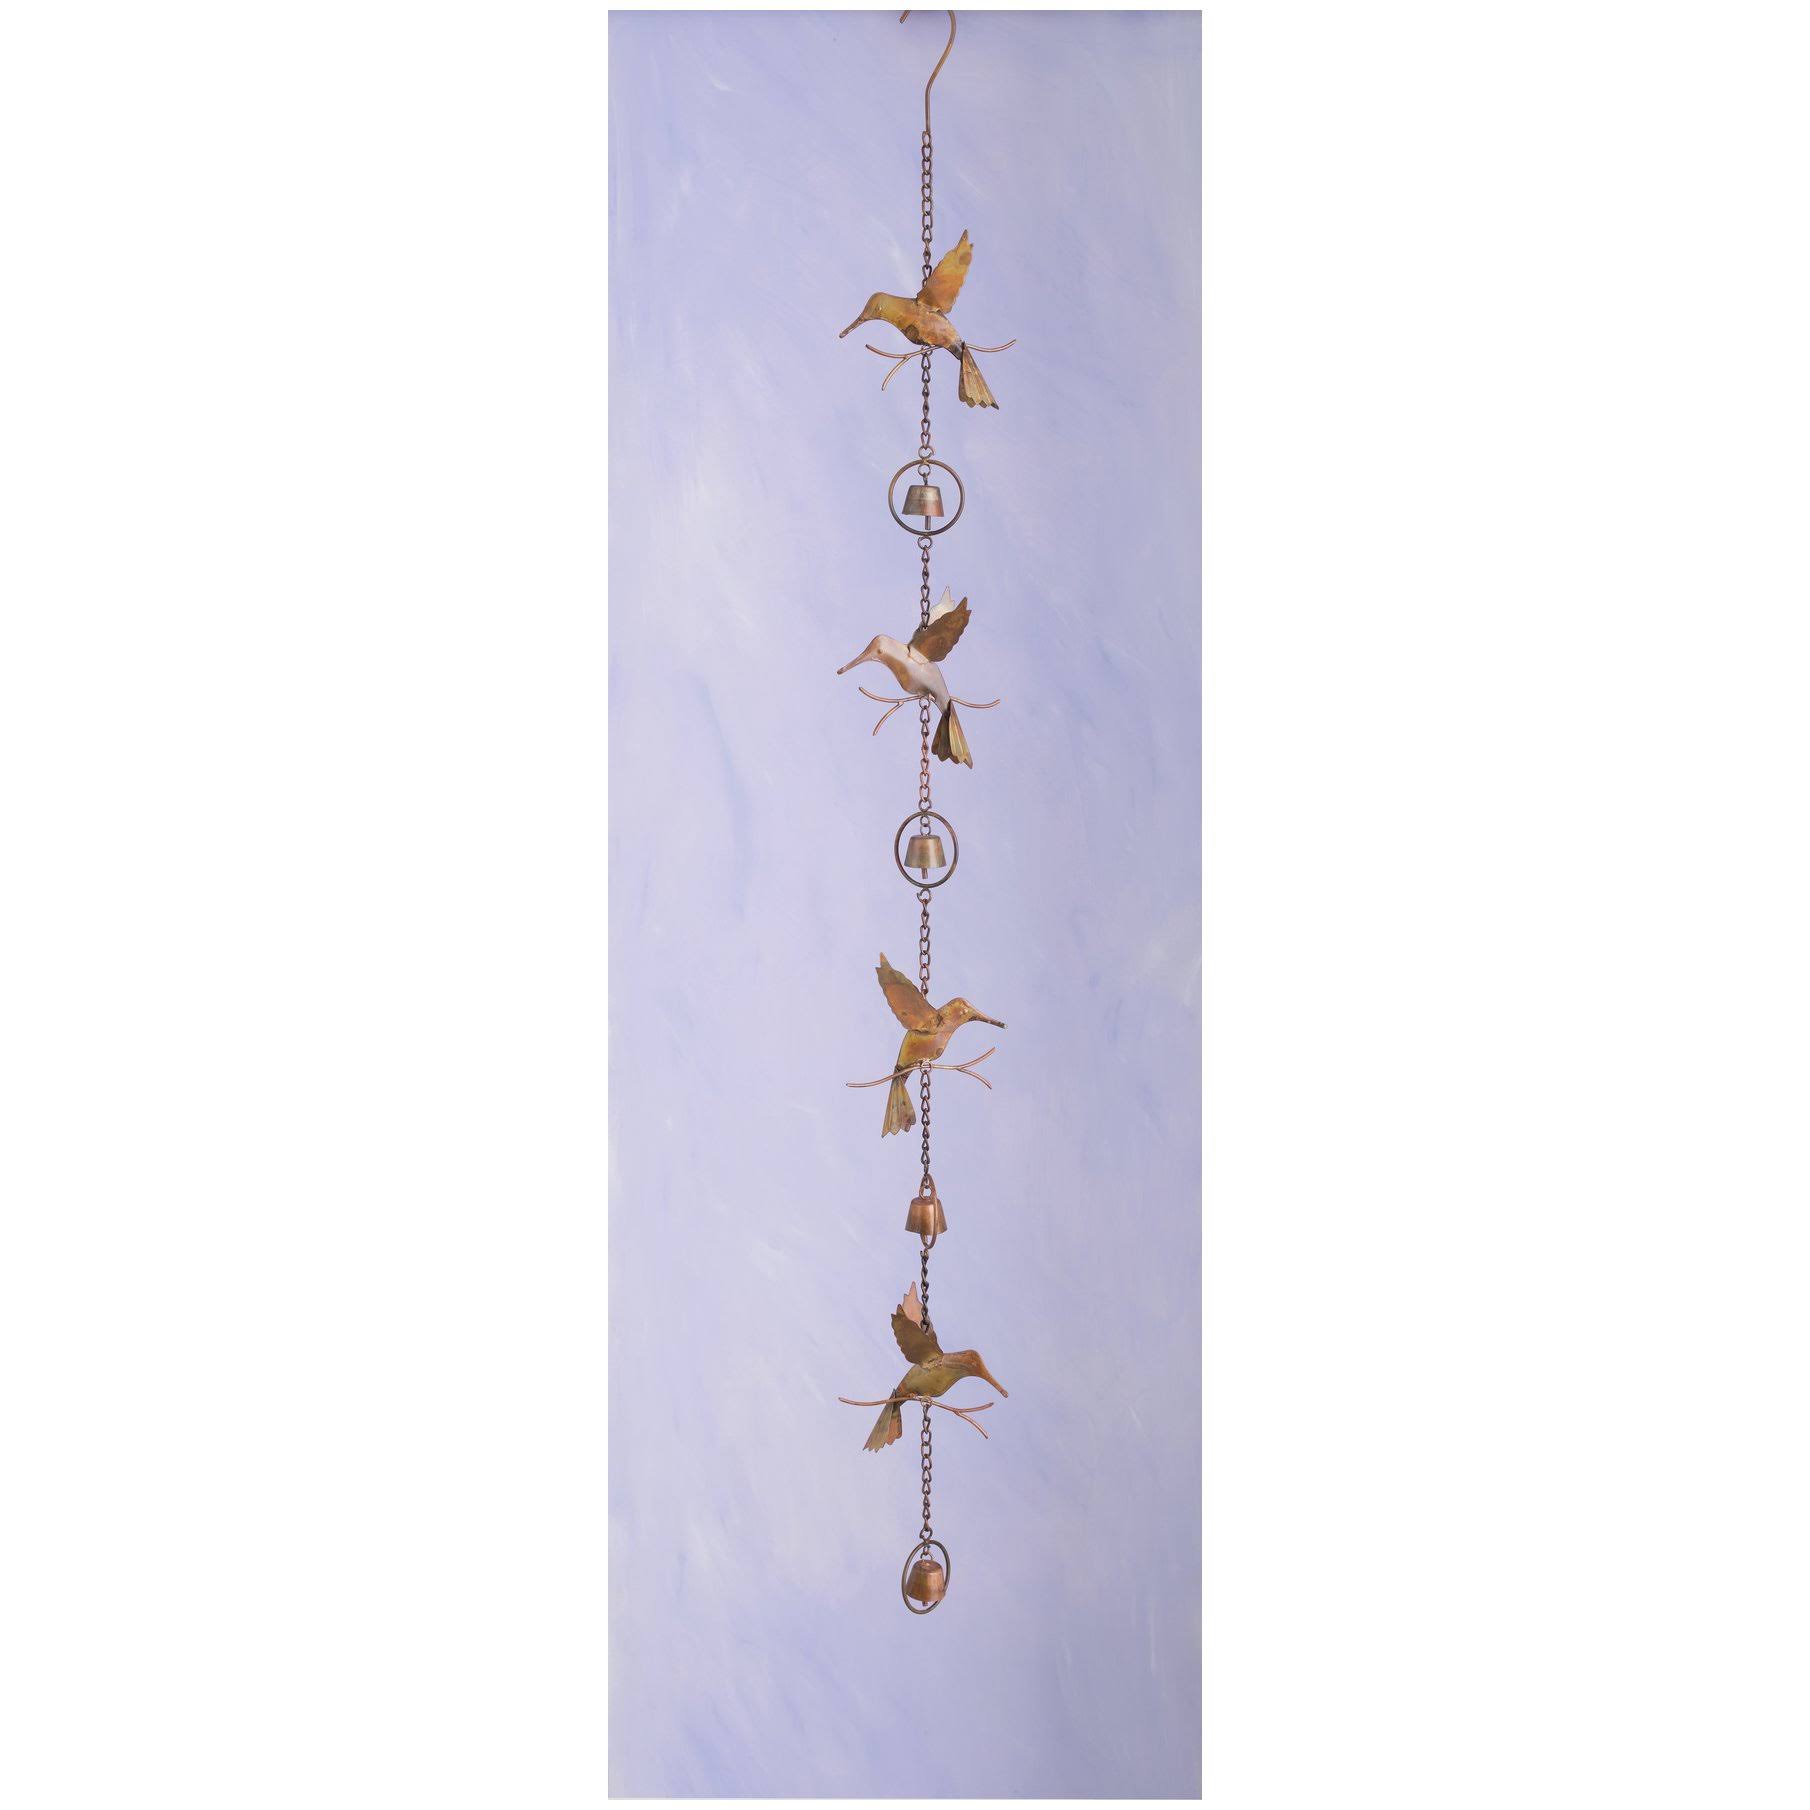 Ancient Graffiti Hummingbird & Bells Flamed Hanging Ornament